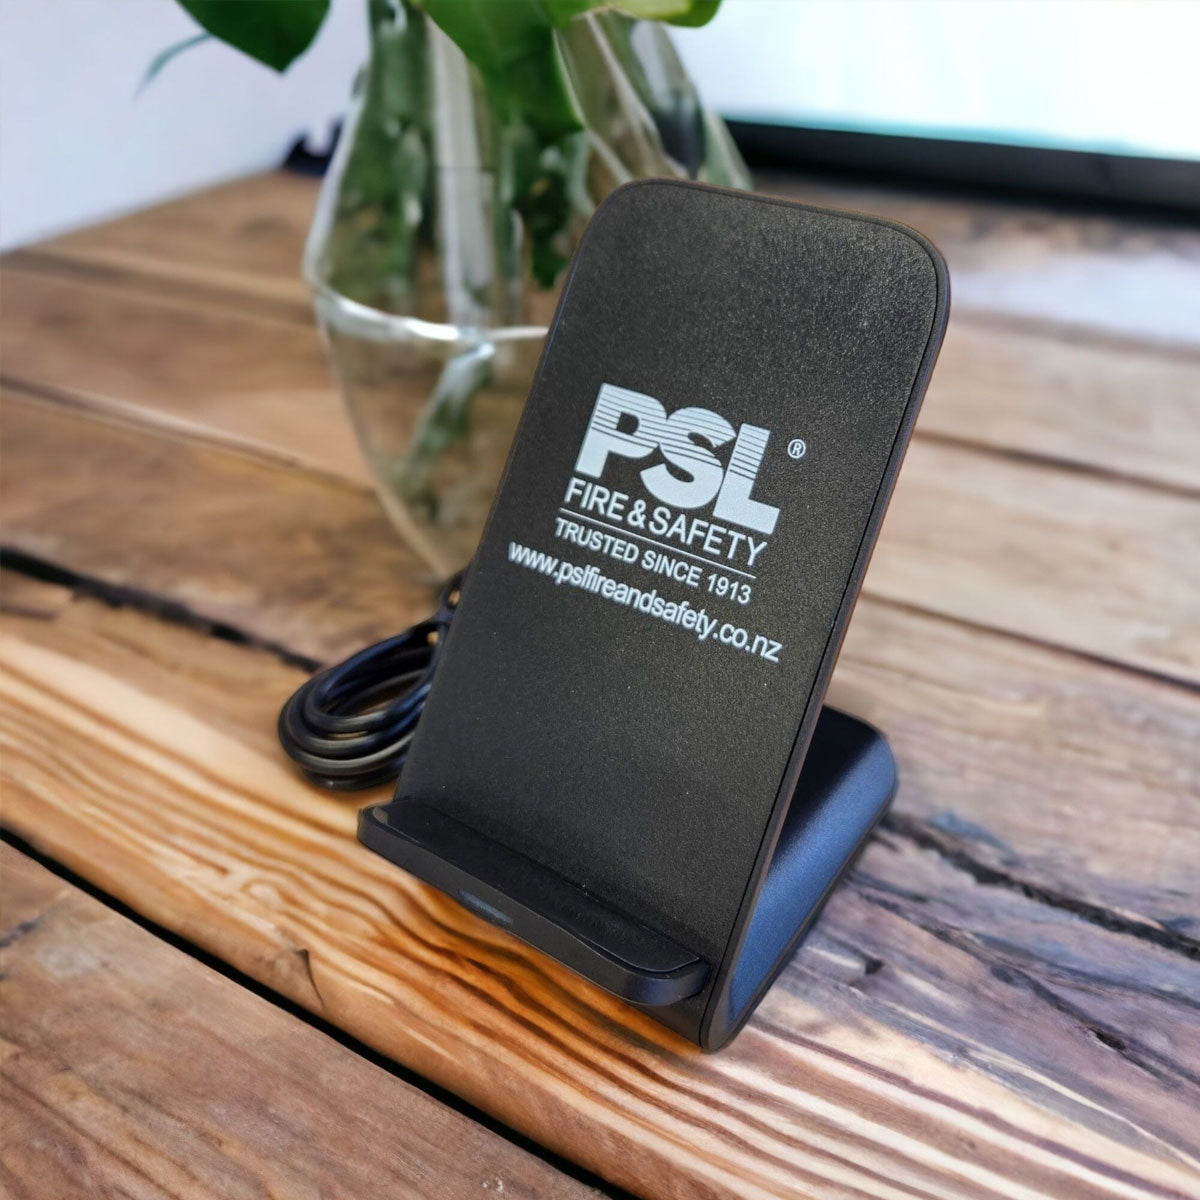 PSL Wireless Charging Station